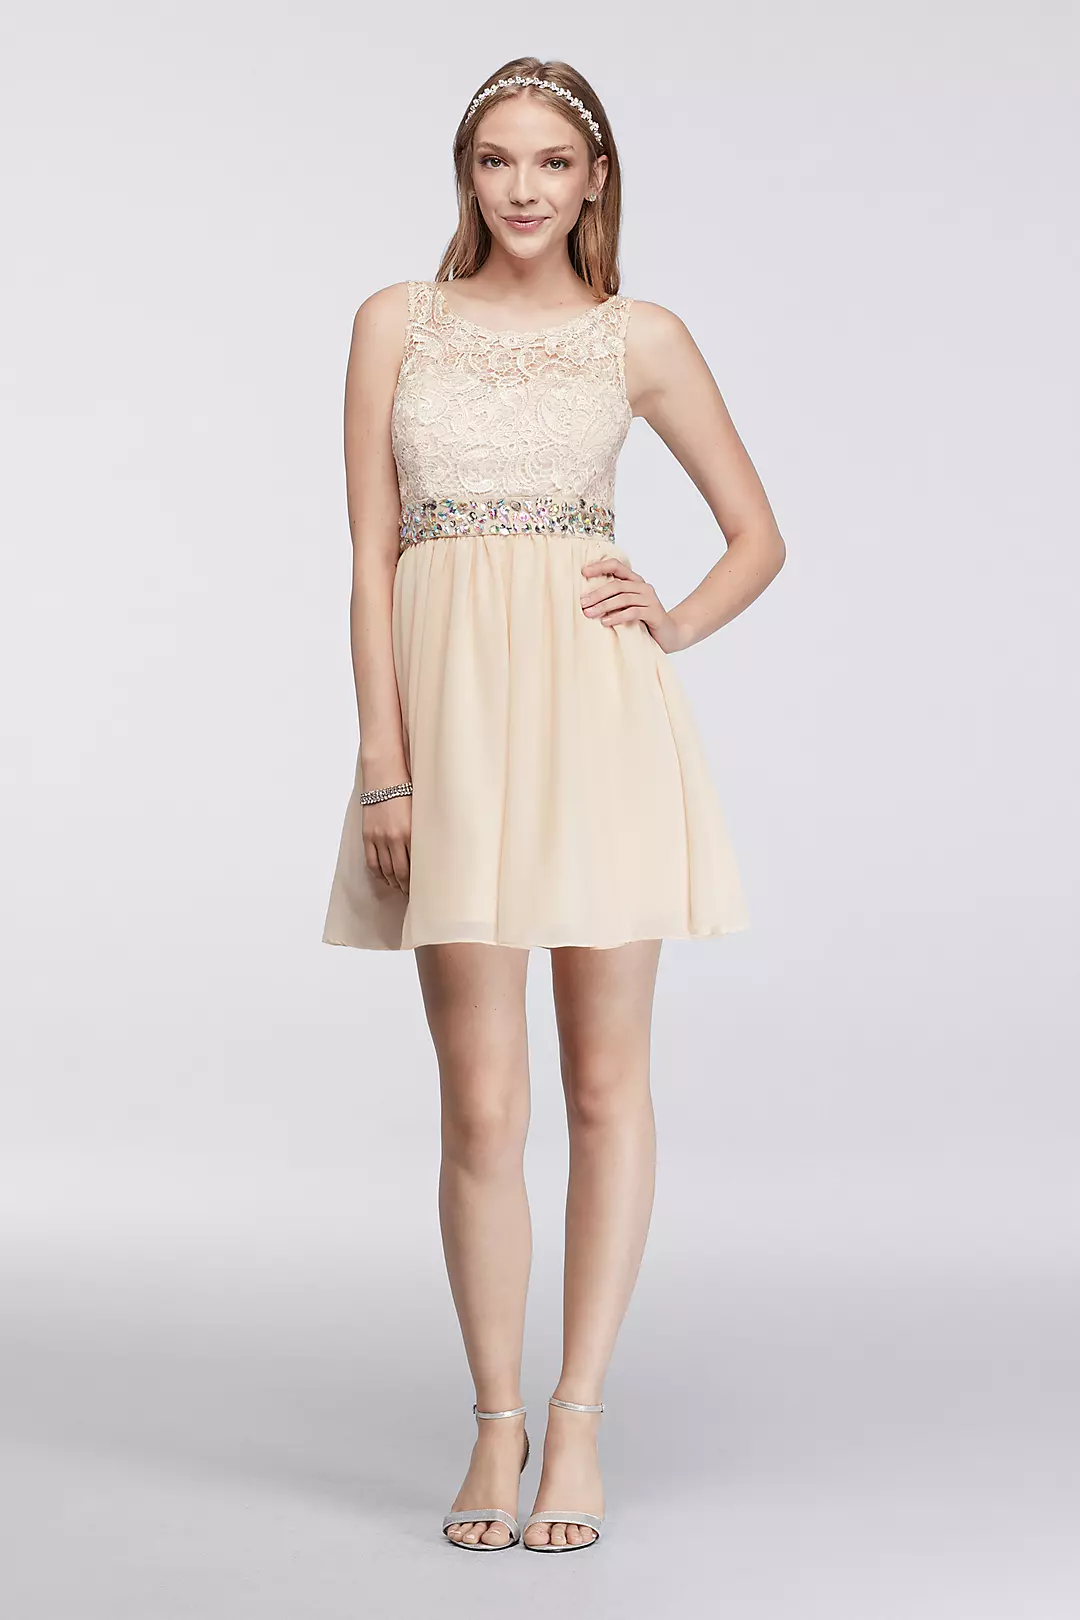 Sleeveless Homecoming Dress with Lace Bodice Image